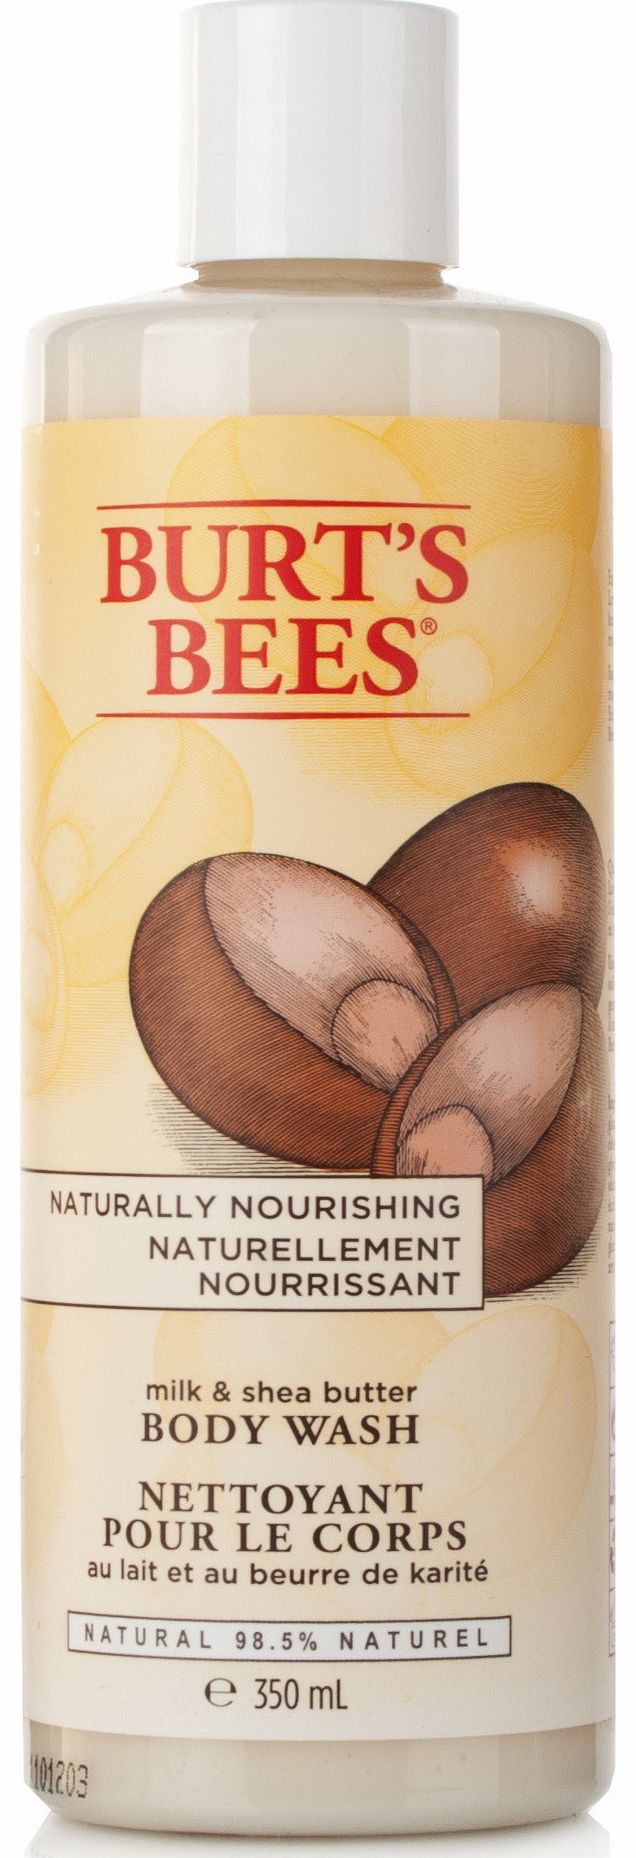 Burt's Bees Body Wash Milk & Shea Butter